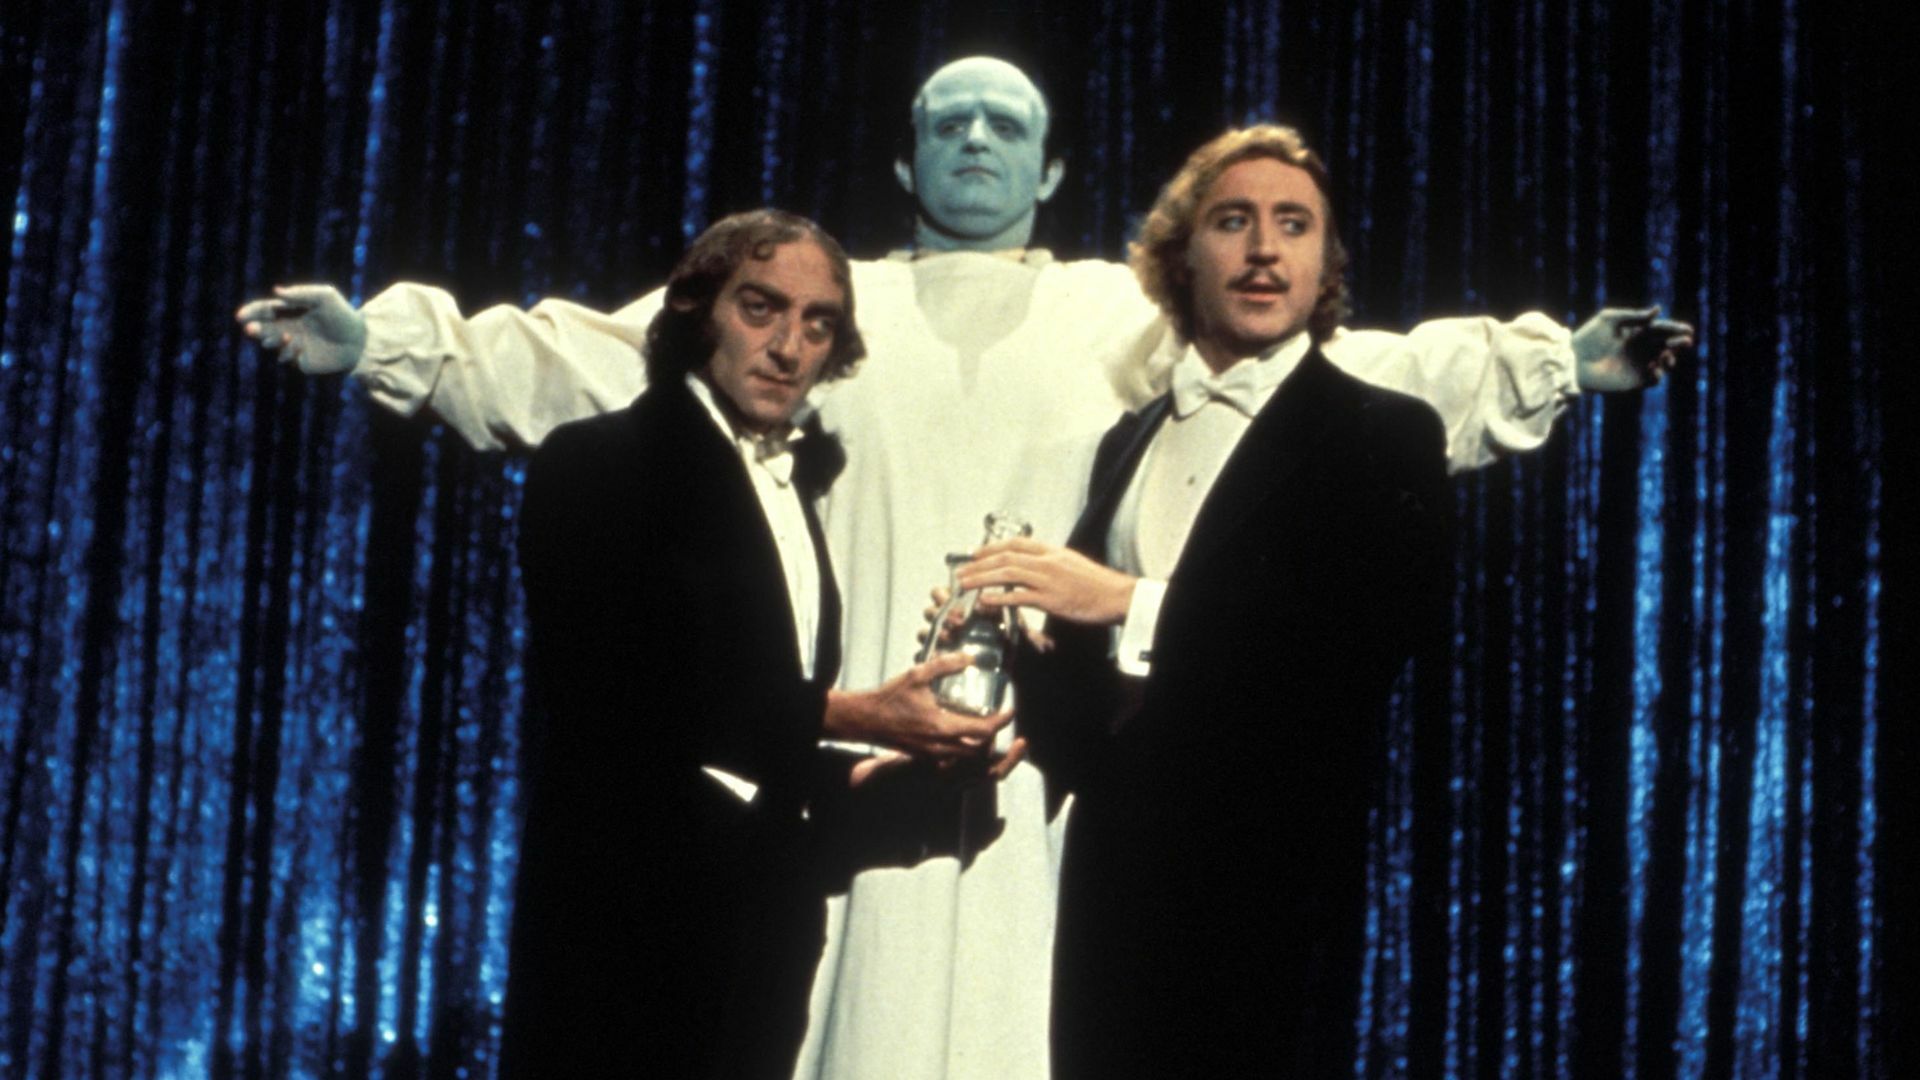 Marty Feldman, Peter Boyle, Gene Wilder in "Young Frankenstein"